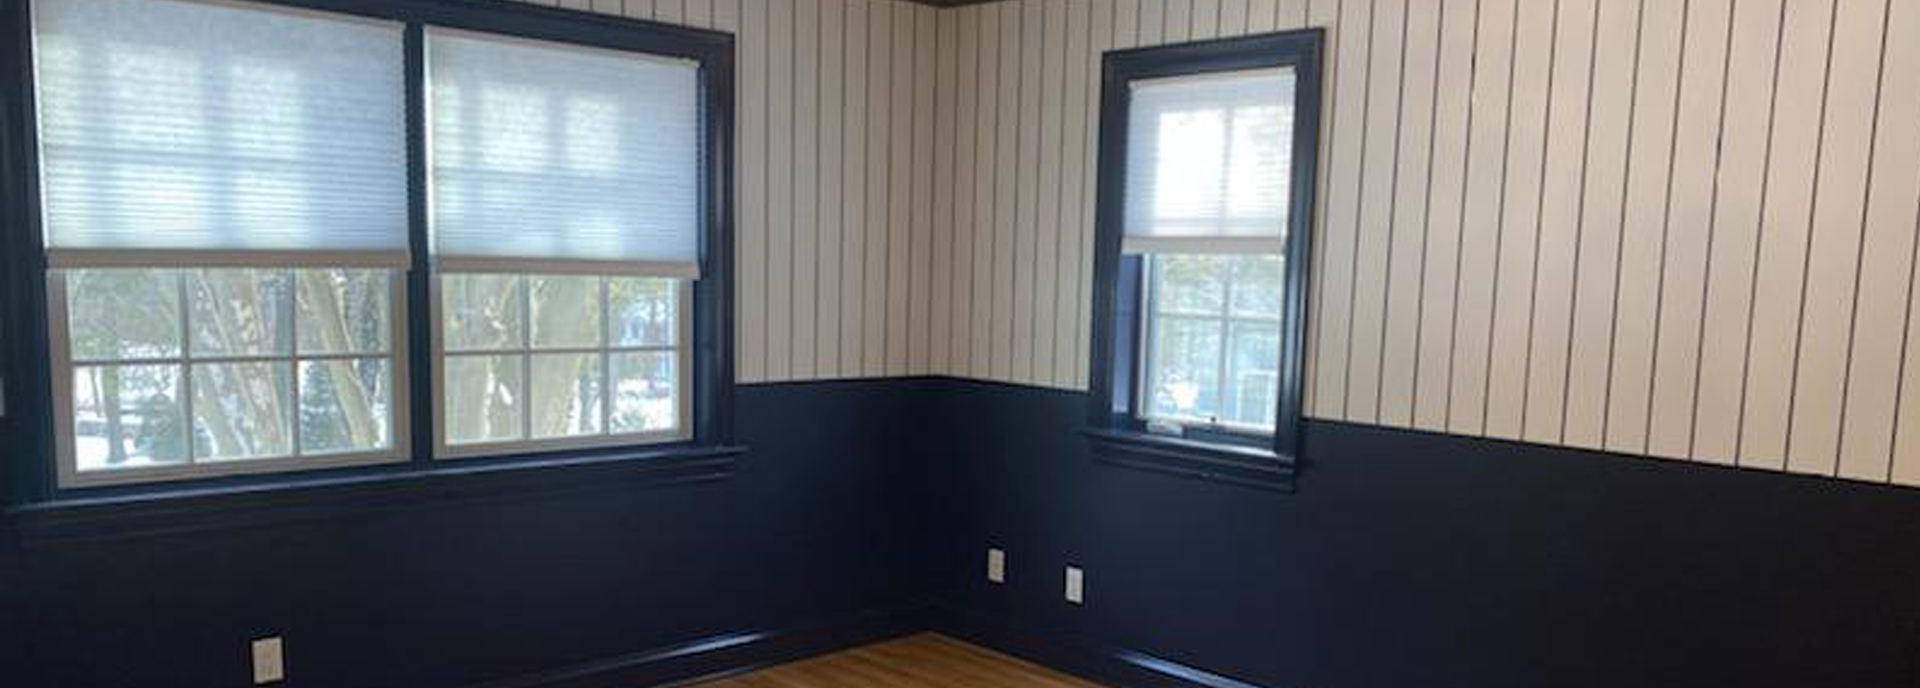 Professional Bedroom Interior Painting Stamford, CT